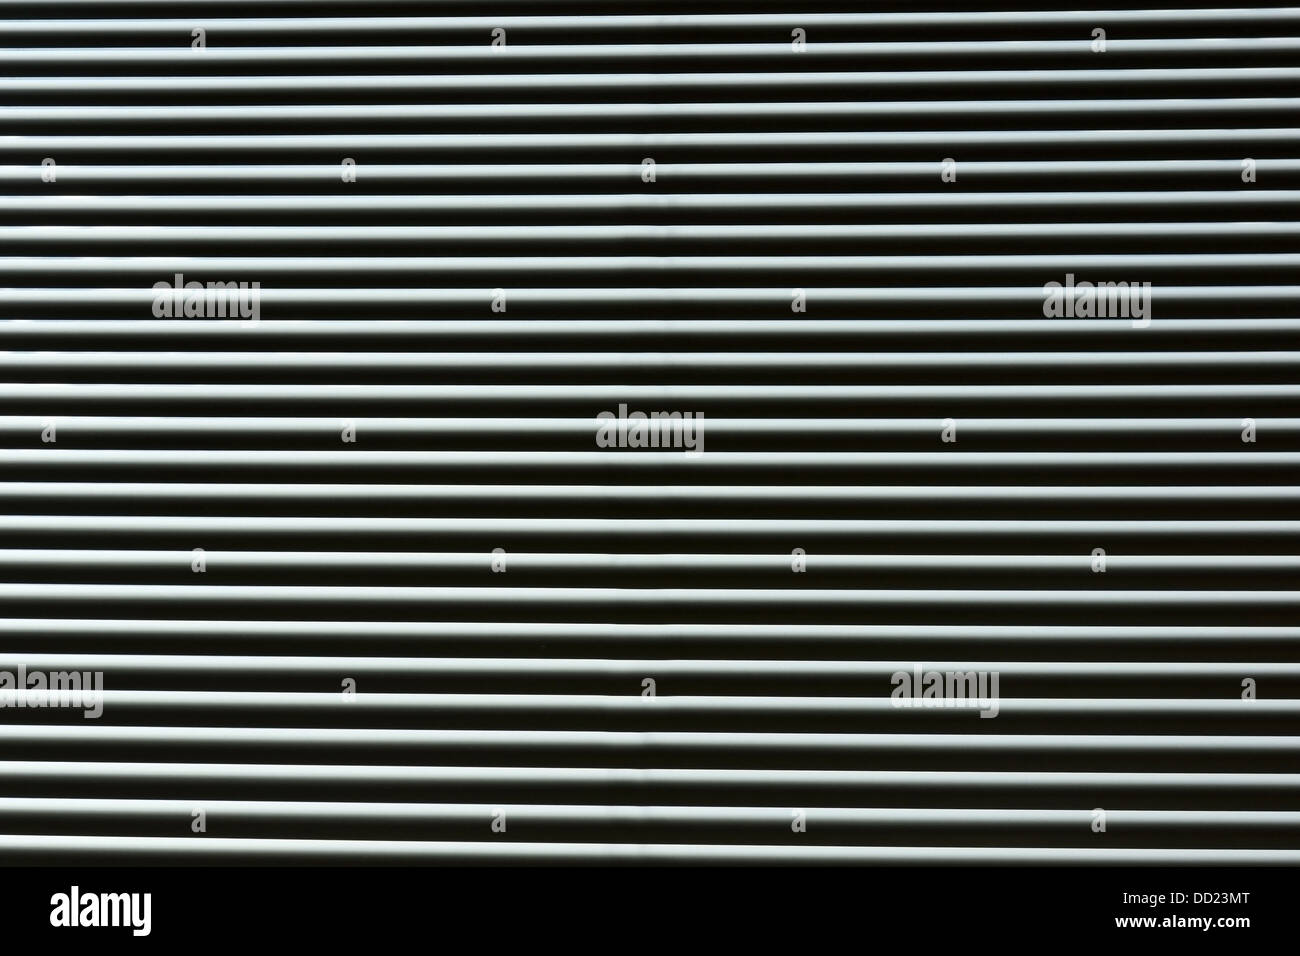 Window's metallilc blinds Stock Photo